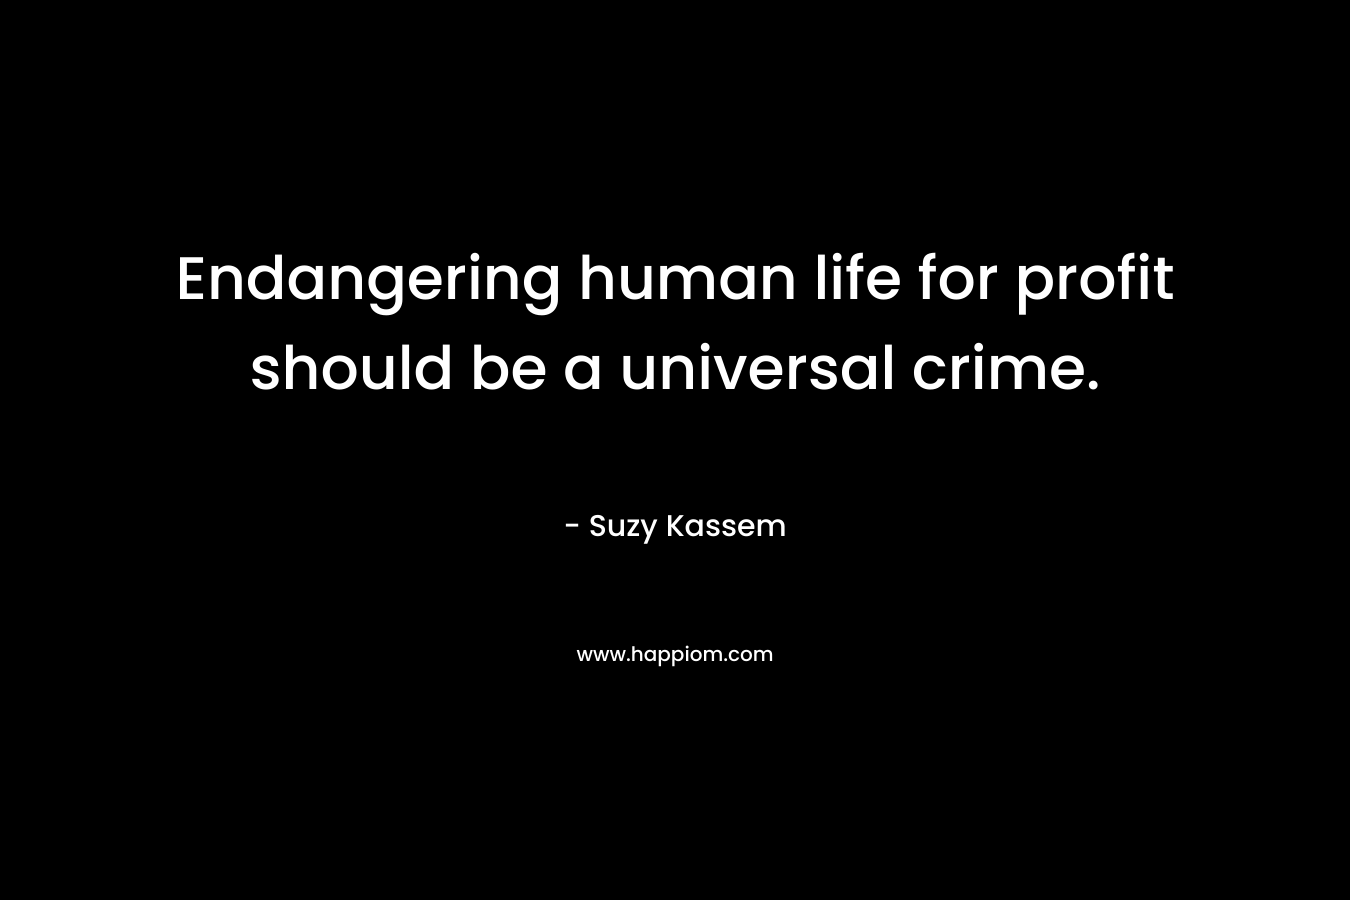 Endangering human life for profit should be a universal crime.